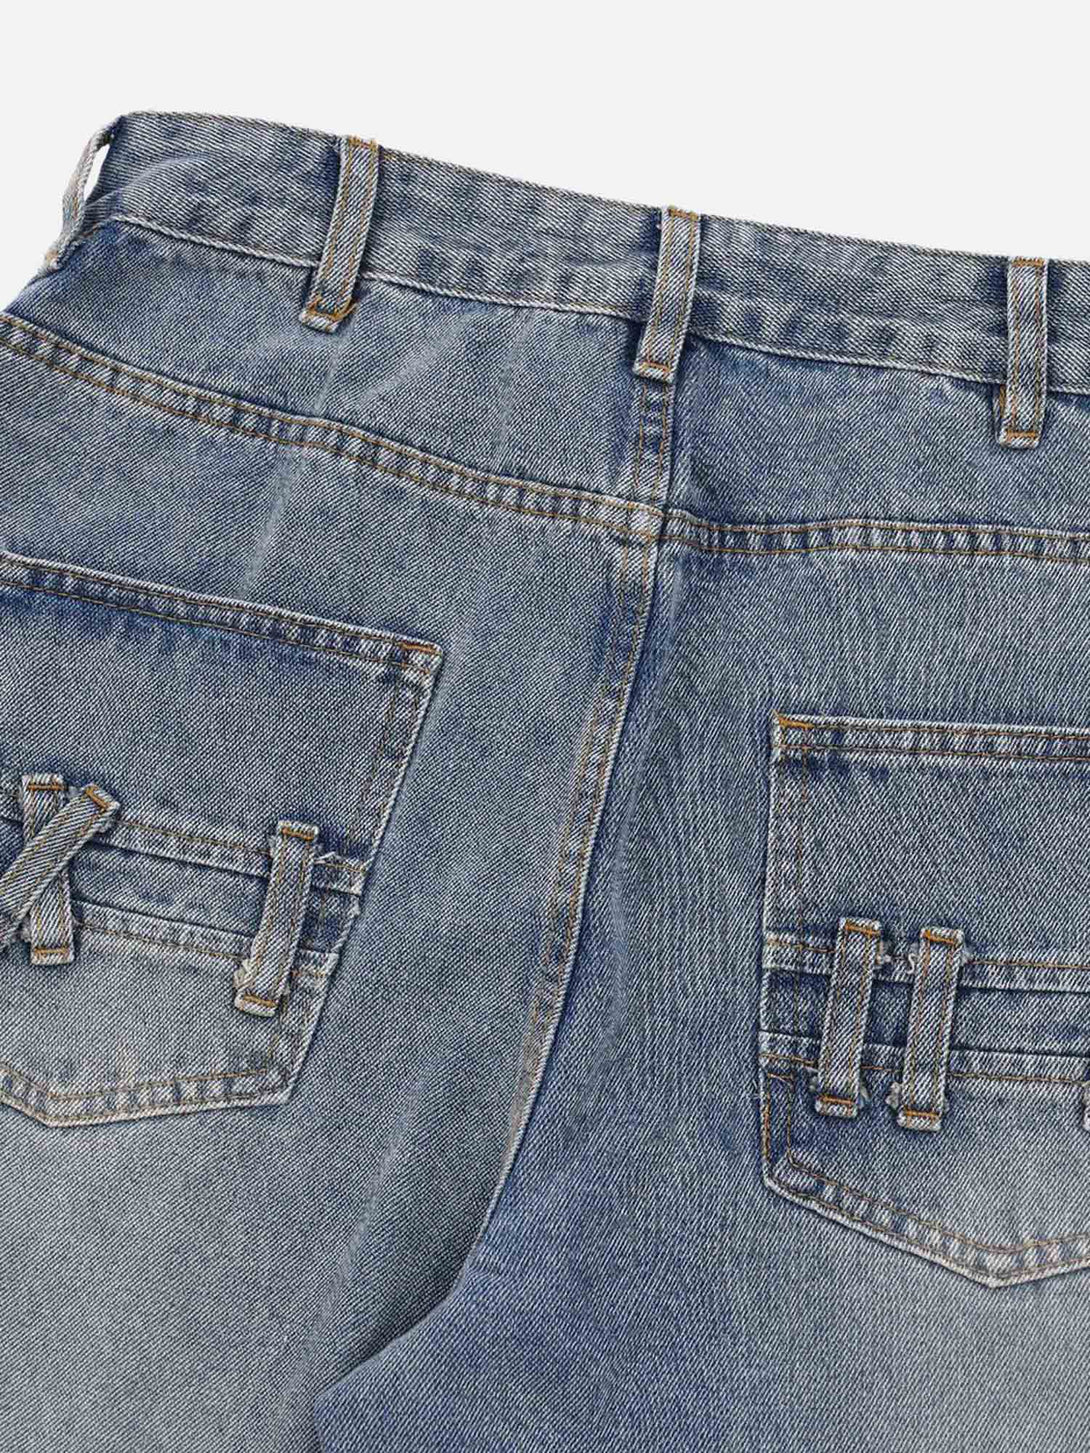 Majesda® - Street Fashion Creative Trouser Loop Design Washed Jeans- Outfit Ideas - Streetwear Fashion - majesda.com